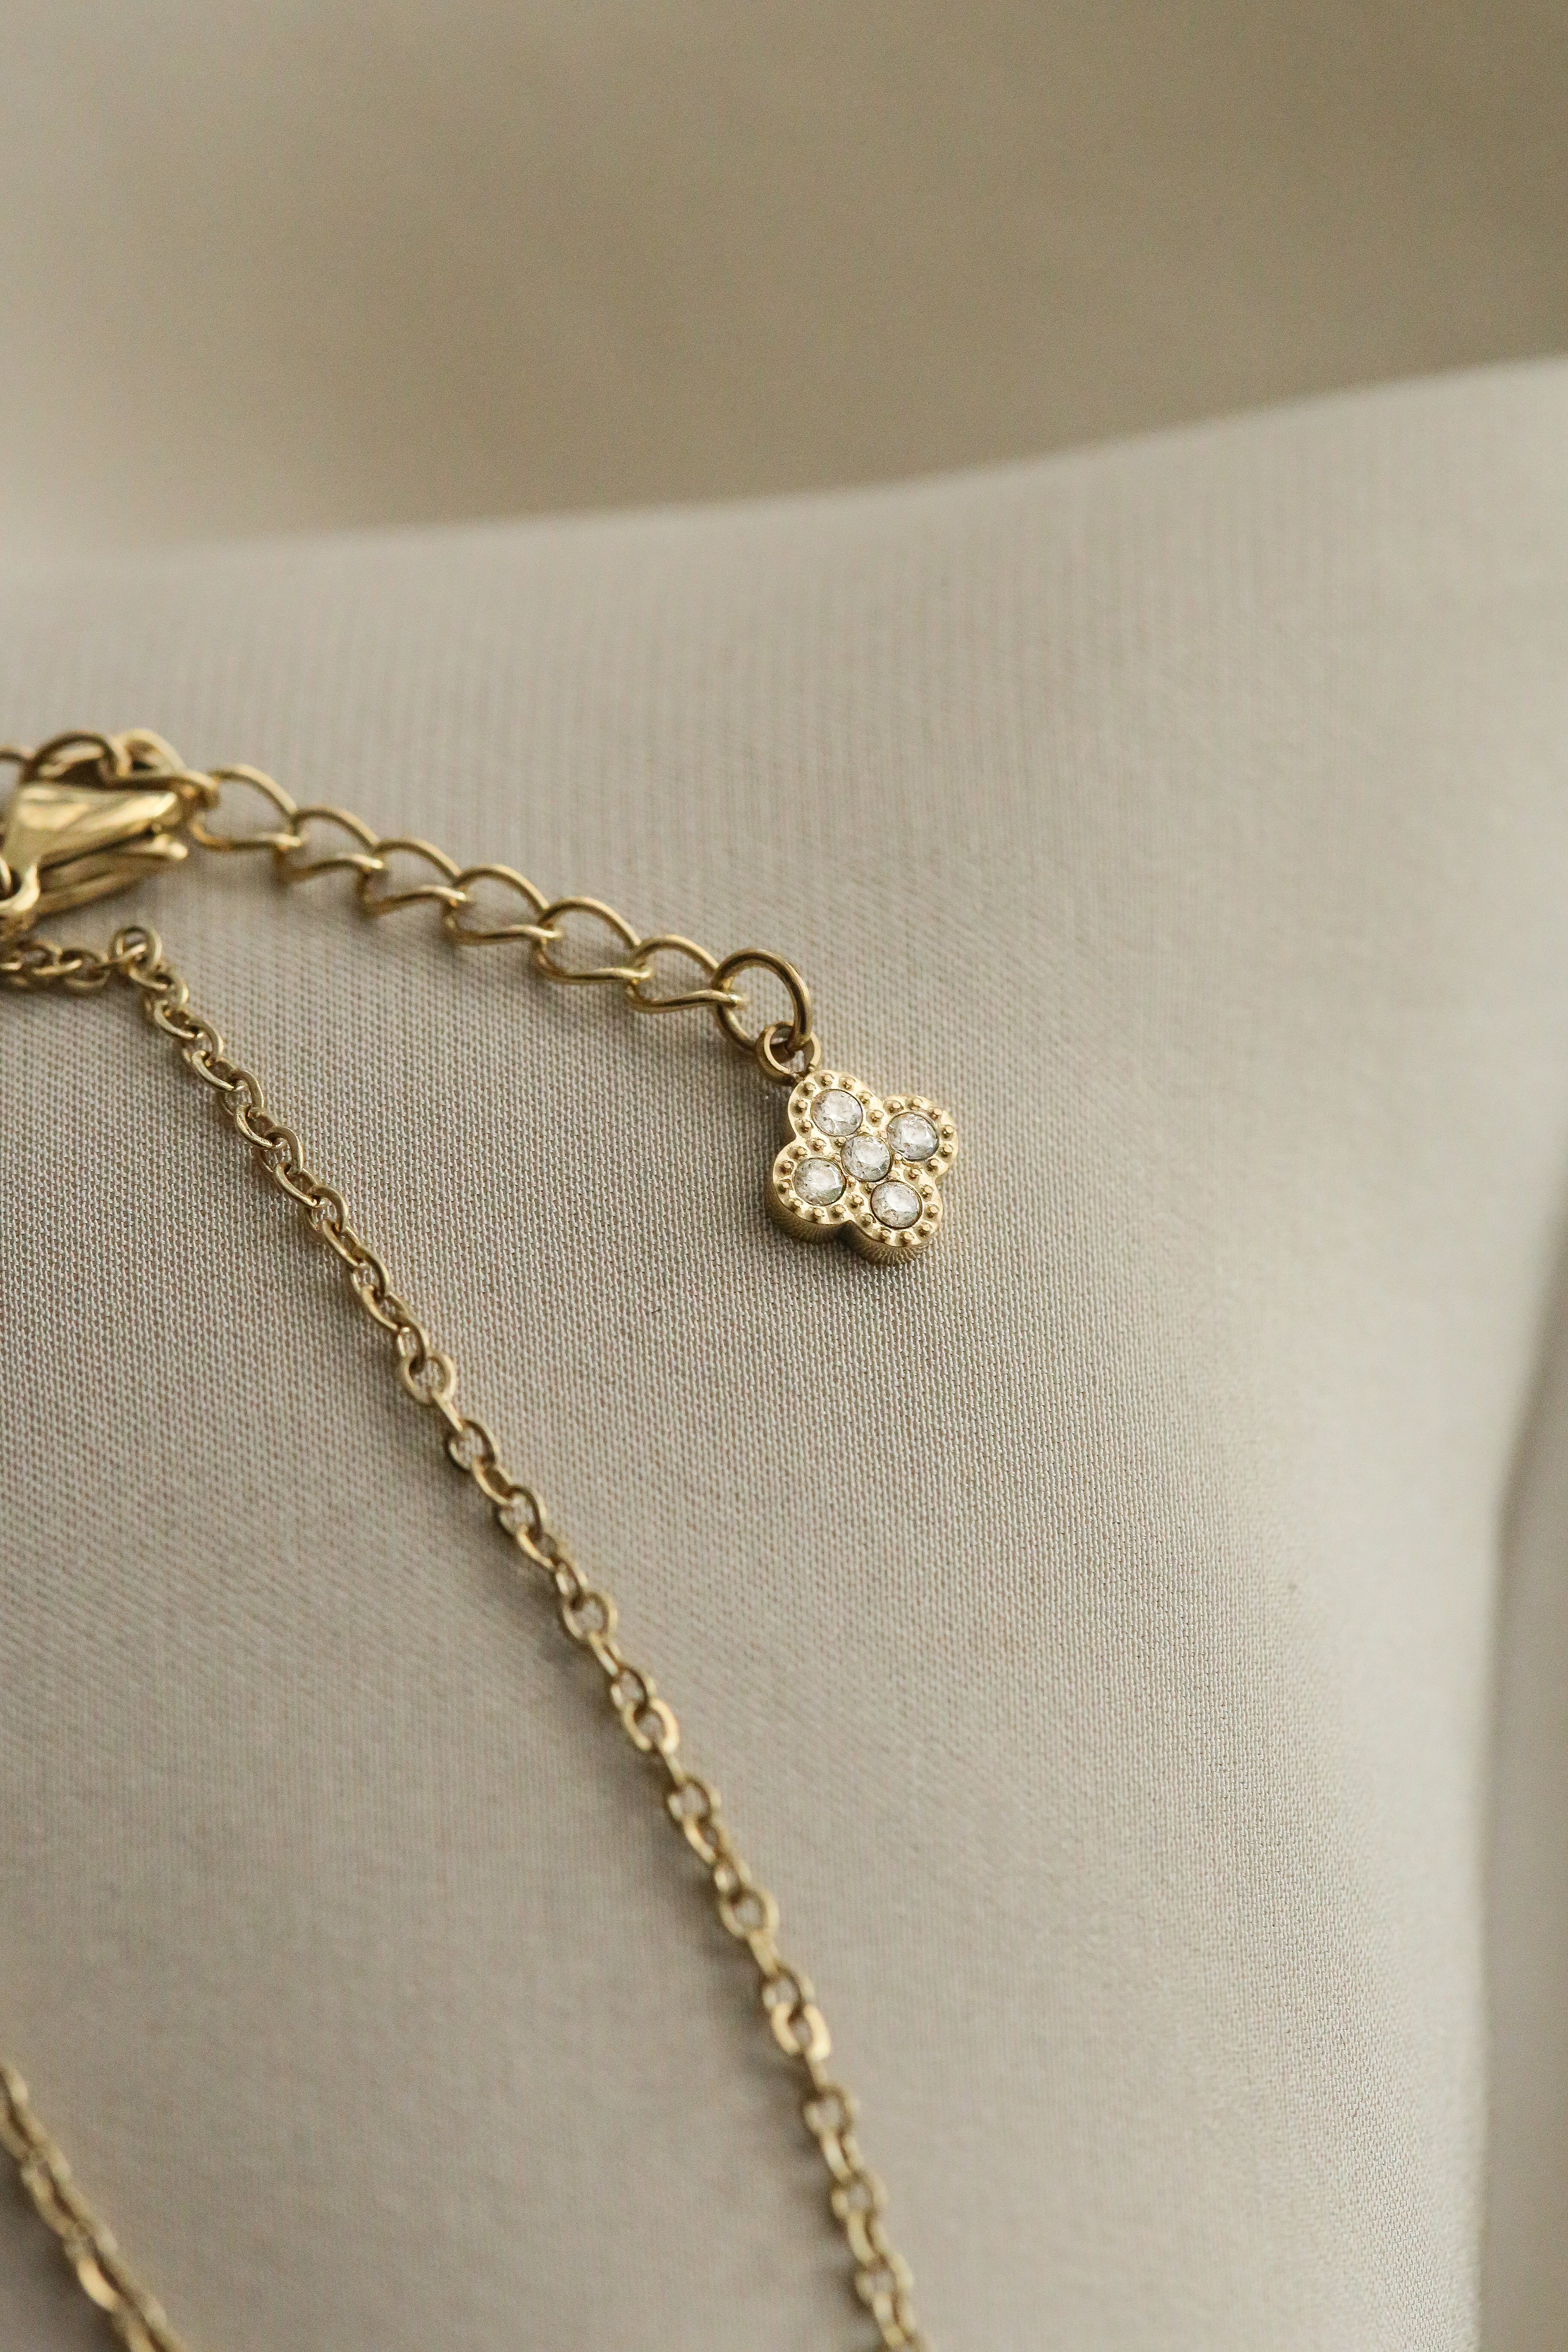 Roma Bracelet - Boutique Minimaliste has waterproof, durable, elegant and vintage inspired jewelry